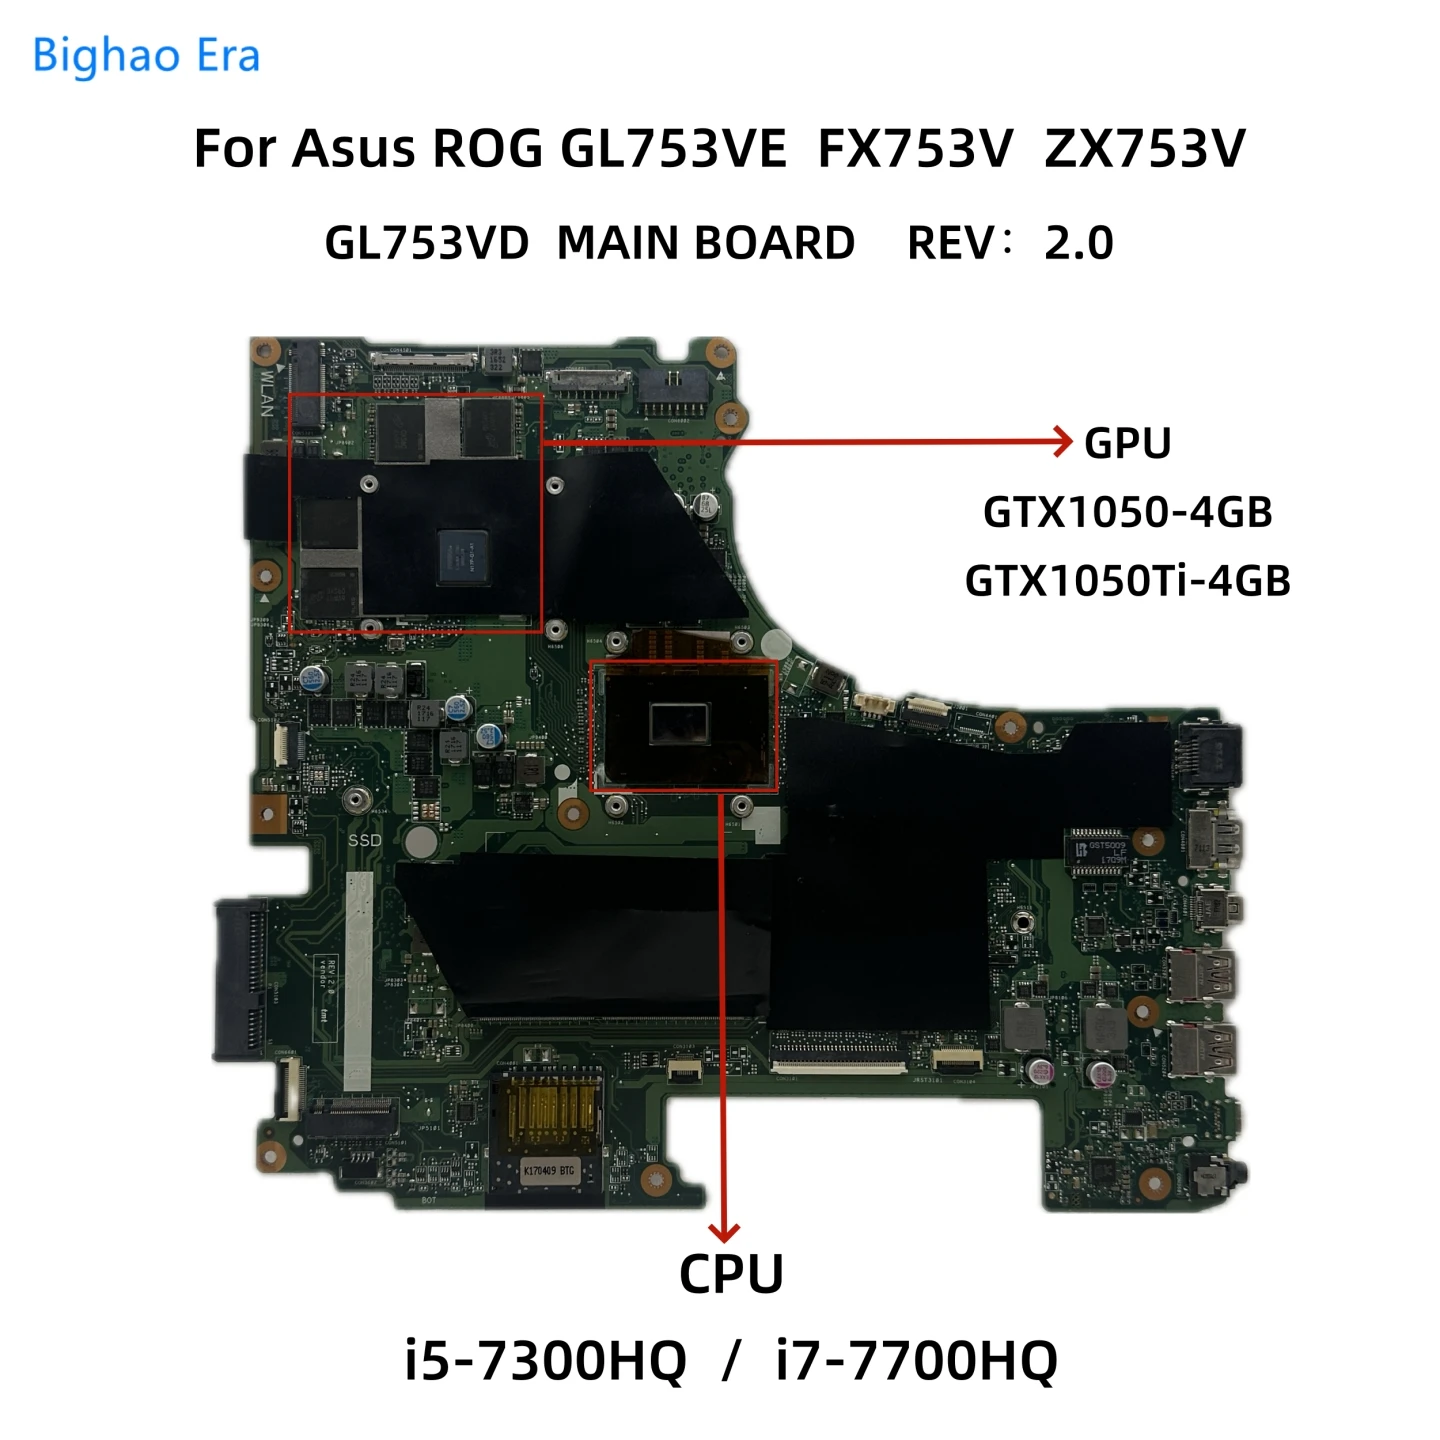 

For Asus ROG FX753V ZX753V GL753VD GL753VE Laptop Motherboard With i5-7300HQ i7-7700HQ CPU GTX1050 GTX1050Ti 4GB Video Card DDR4